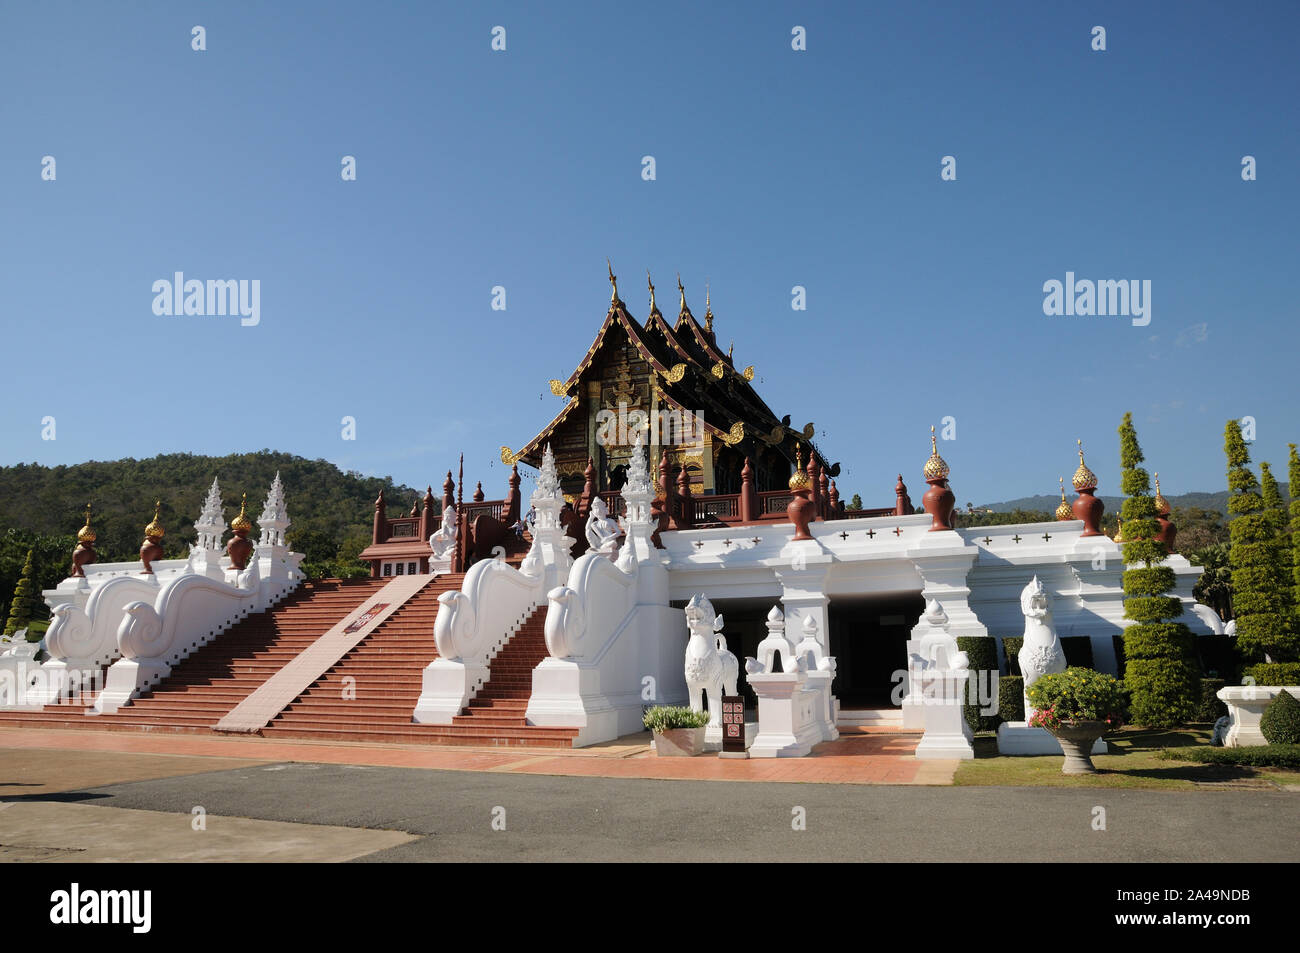 Royal Pavilion, also known as Ho Kham Luang, in Royal Park Ratchapruek, Chiang Mai, Thailand Stock Photo